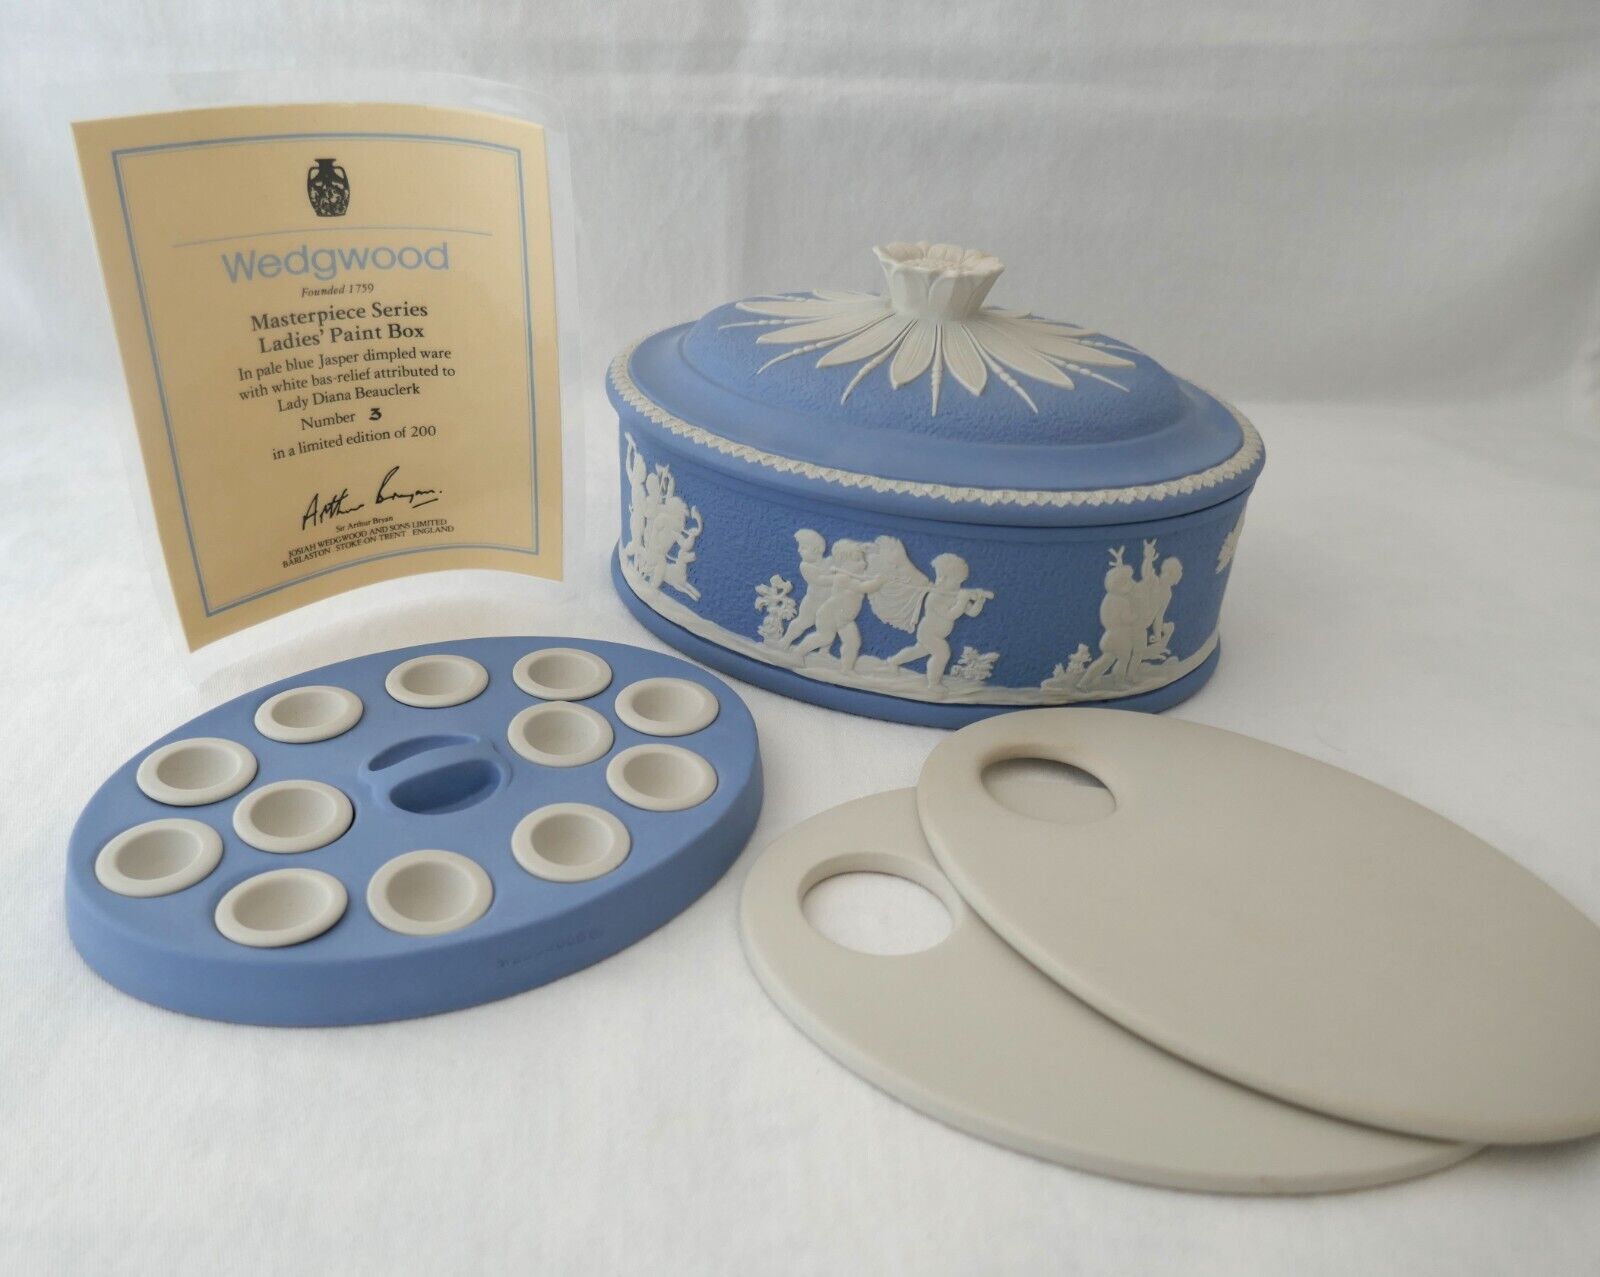 WEDGWOOD Masterpiece Series Ladies blue jasperware Paint Box 3/200